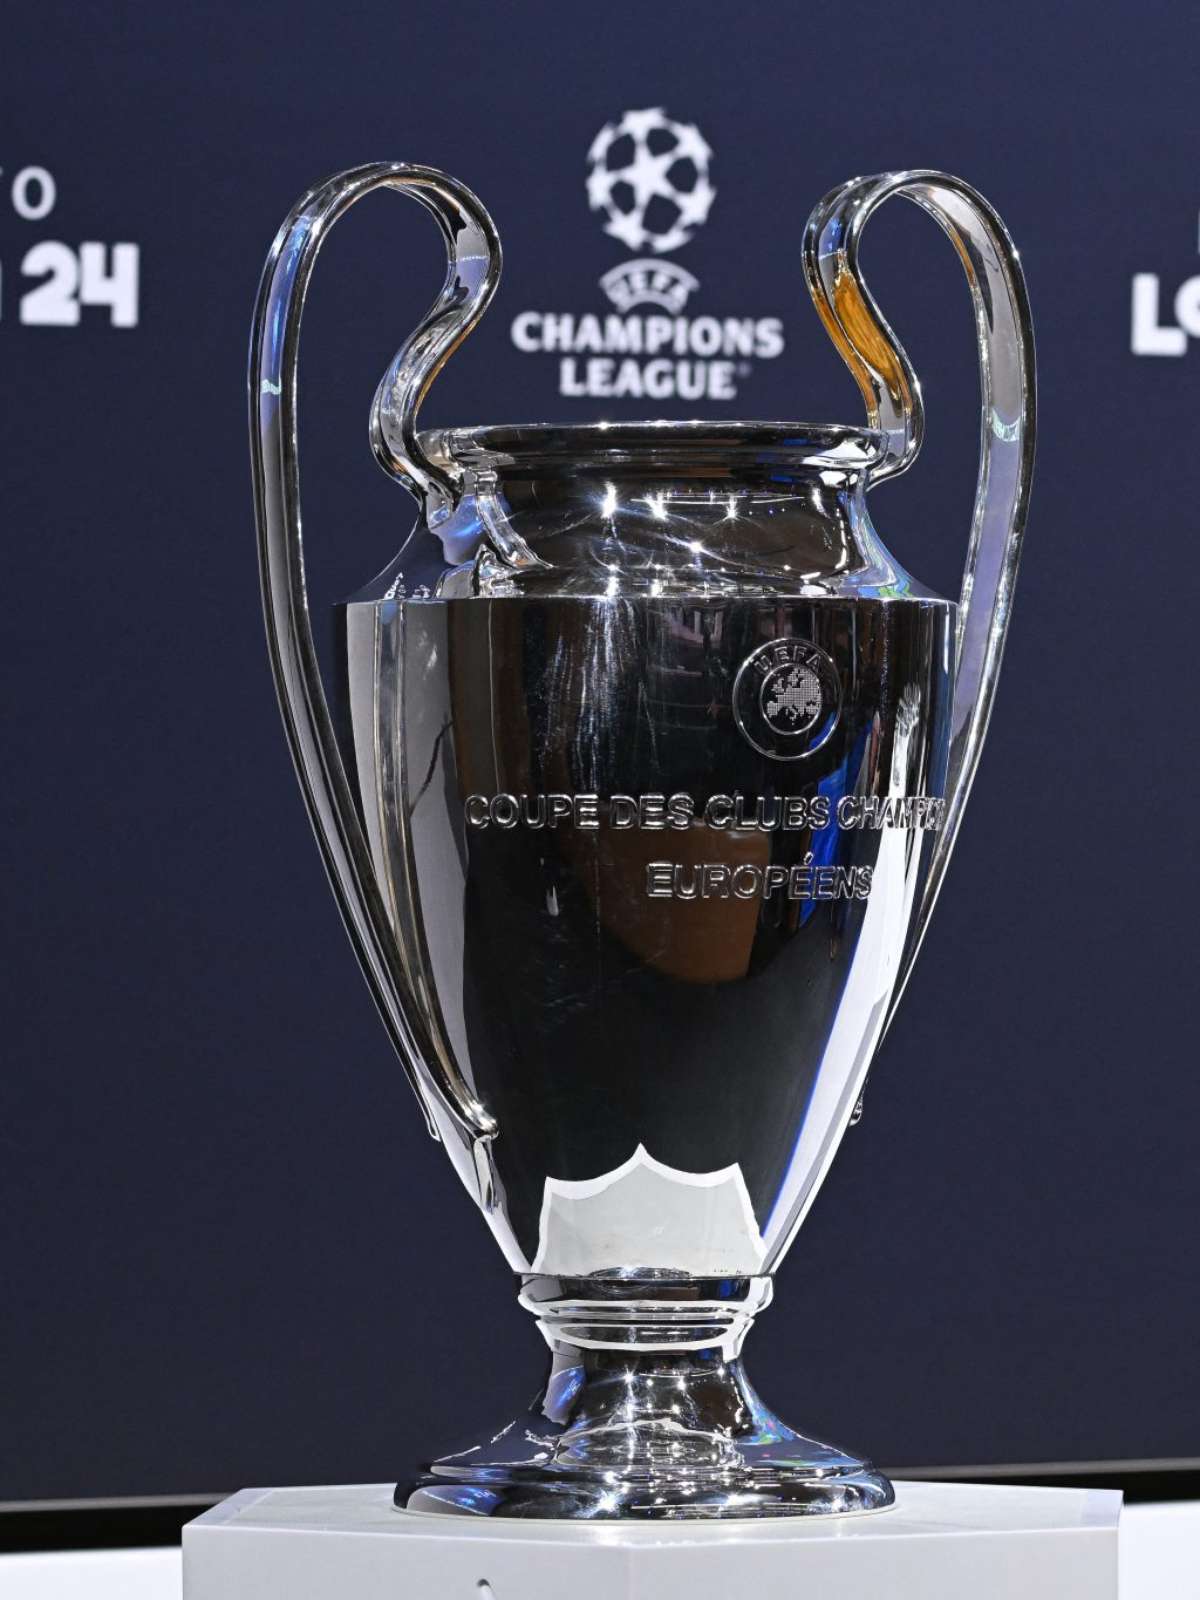 Os times classificados para as oitavas de final da Champions League 2023/ 2024